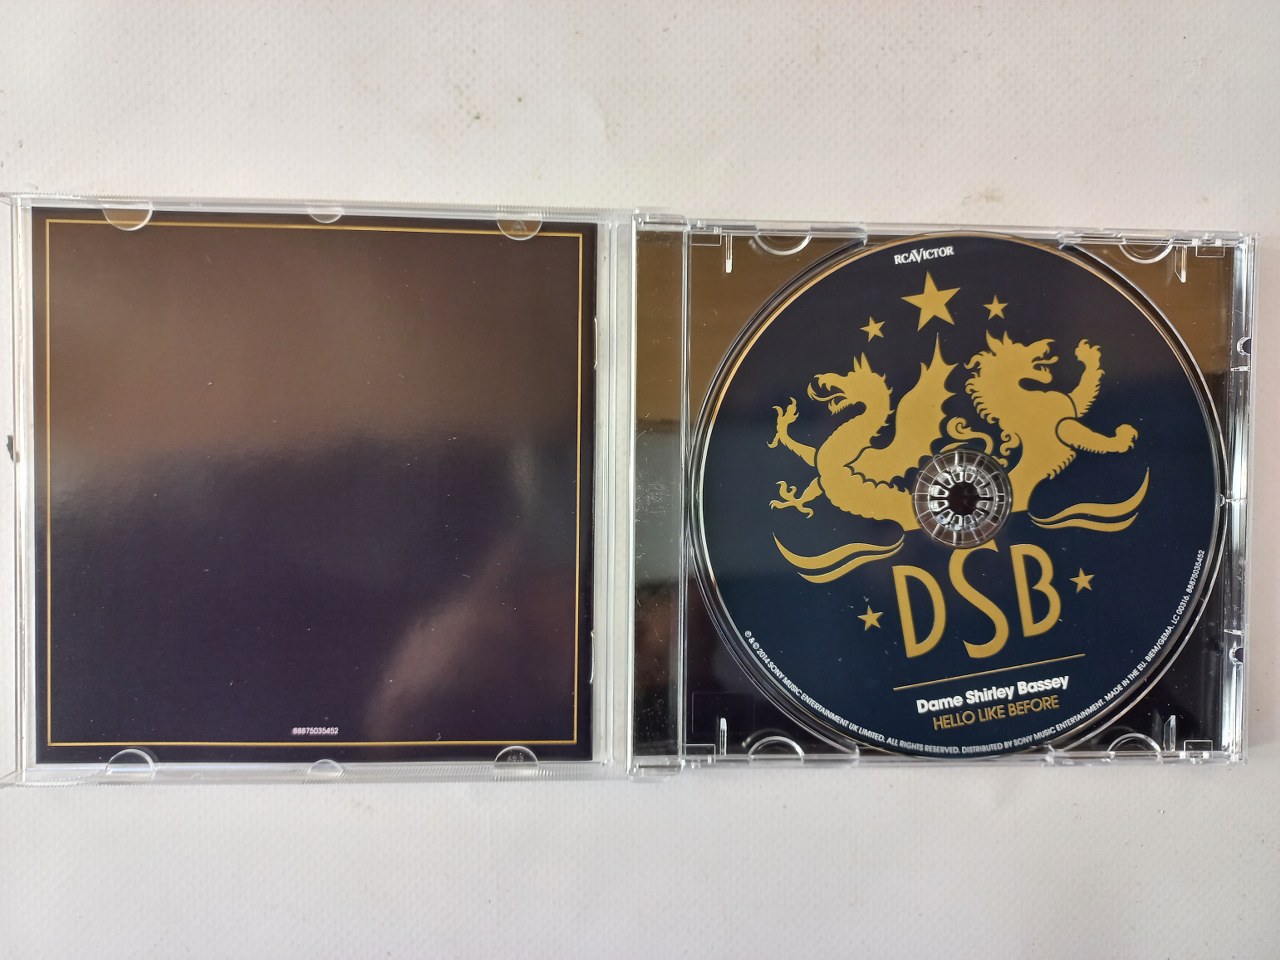 0888750354525 Dame Shirley Bassey–Hello Like Before CD EU 2014